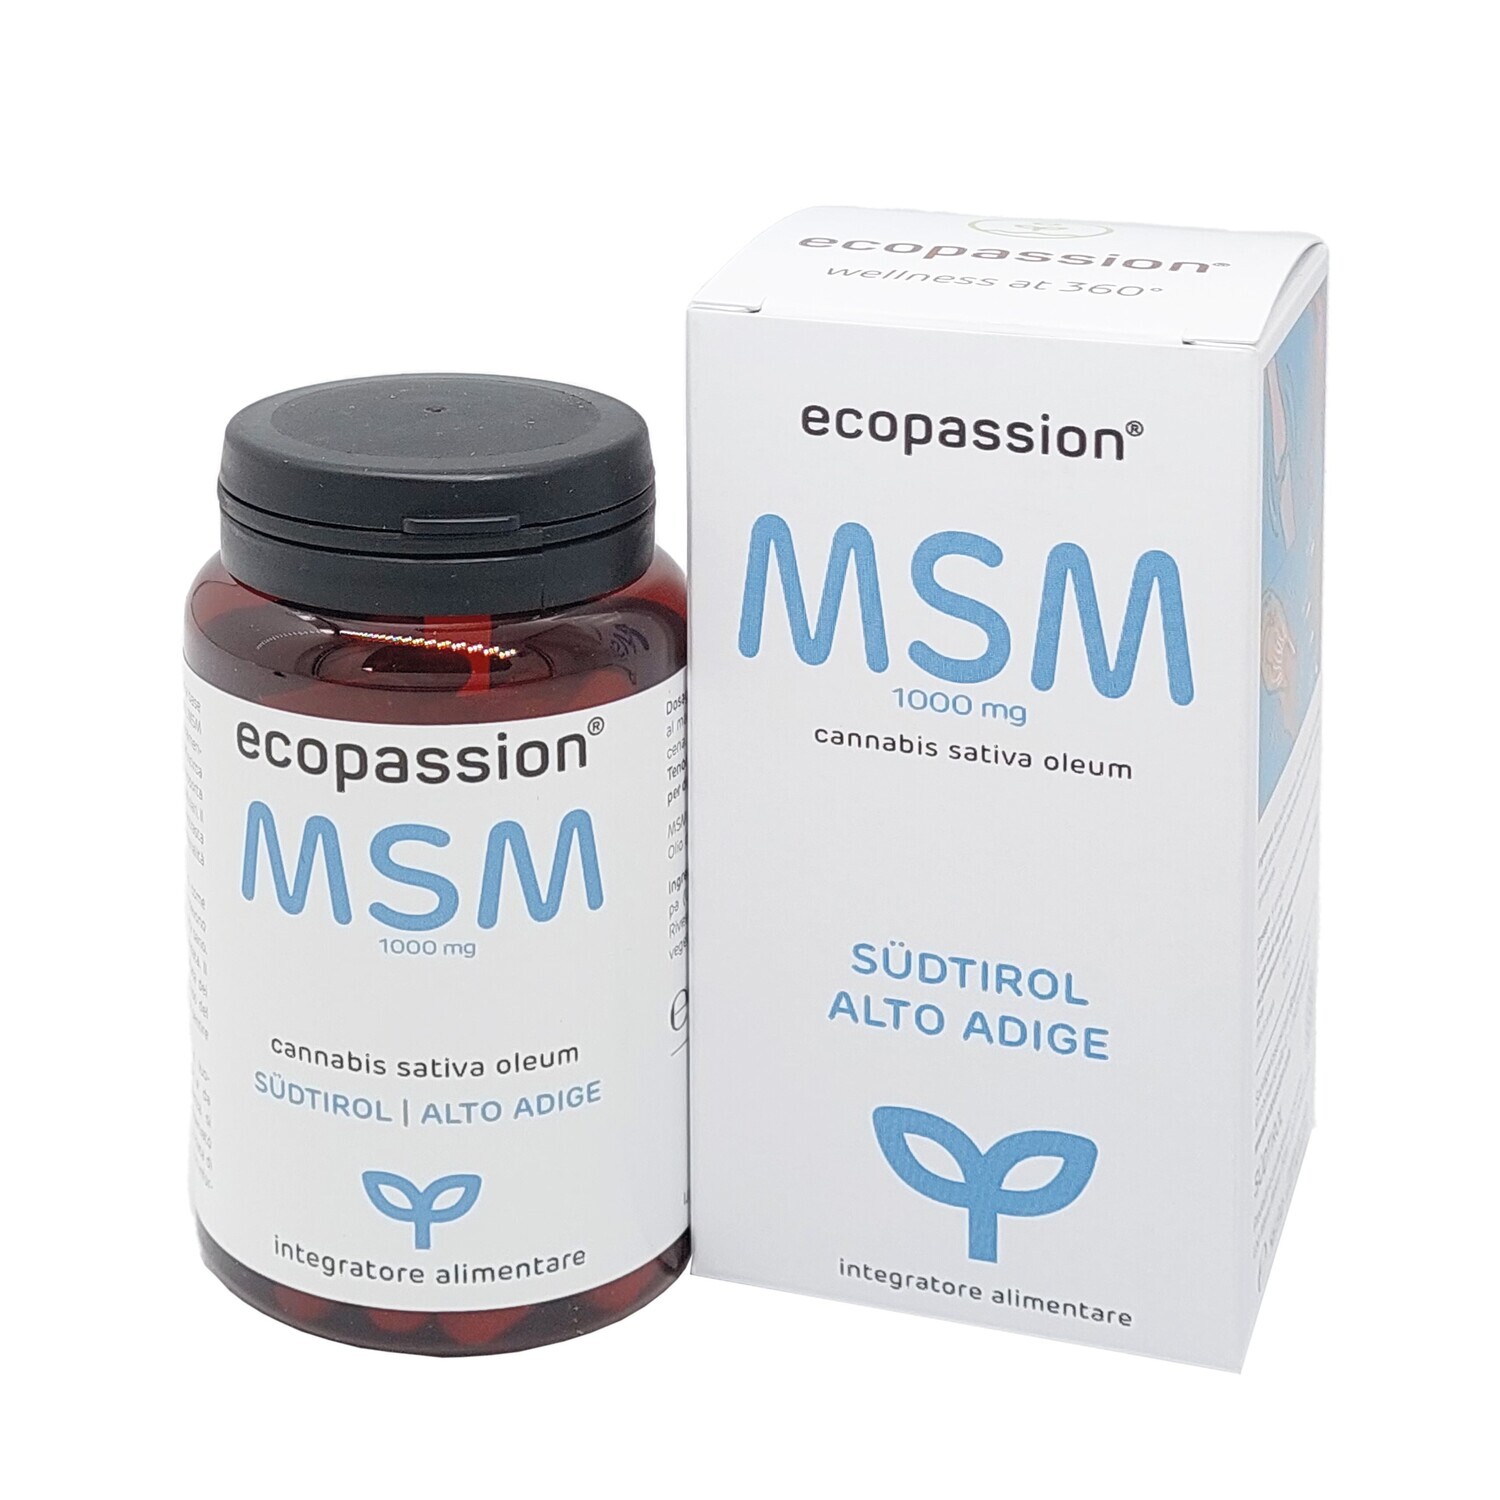 Ecopassion MSM (1000mg) cannabis sativa oleum - 90
cap. - 56,8 g - Südtirol